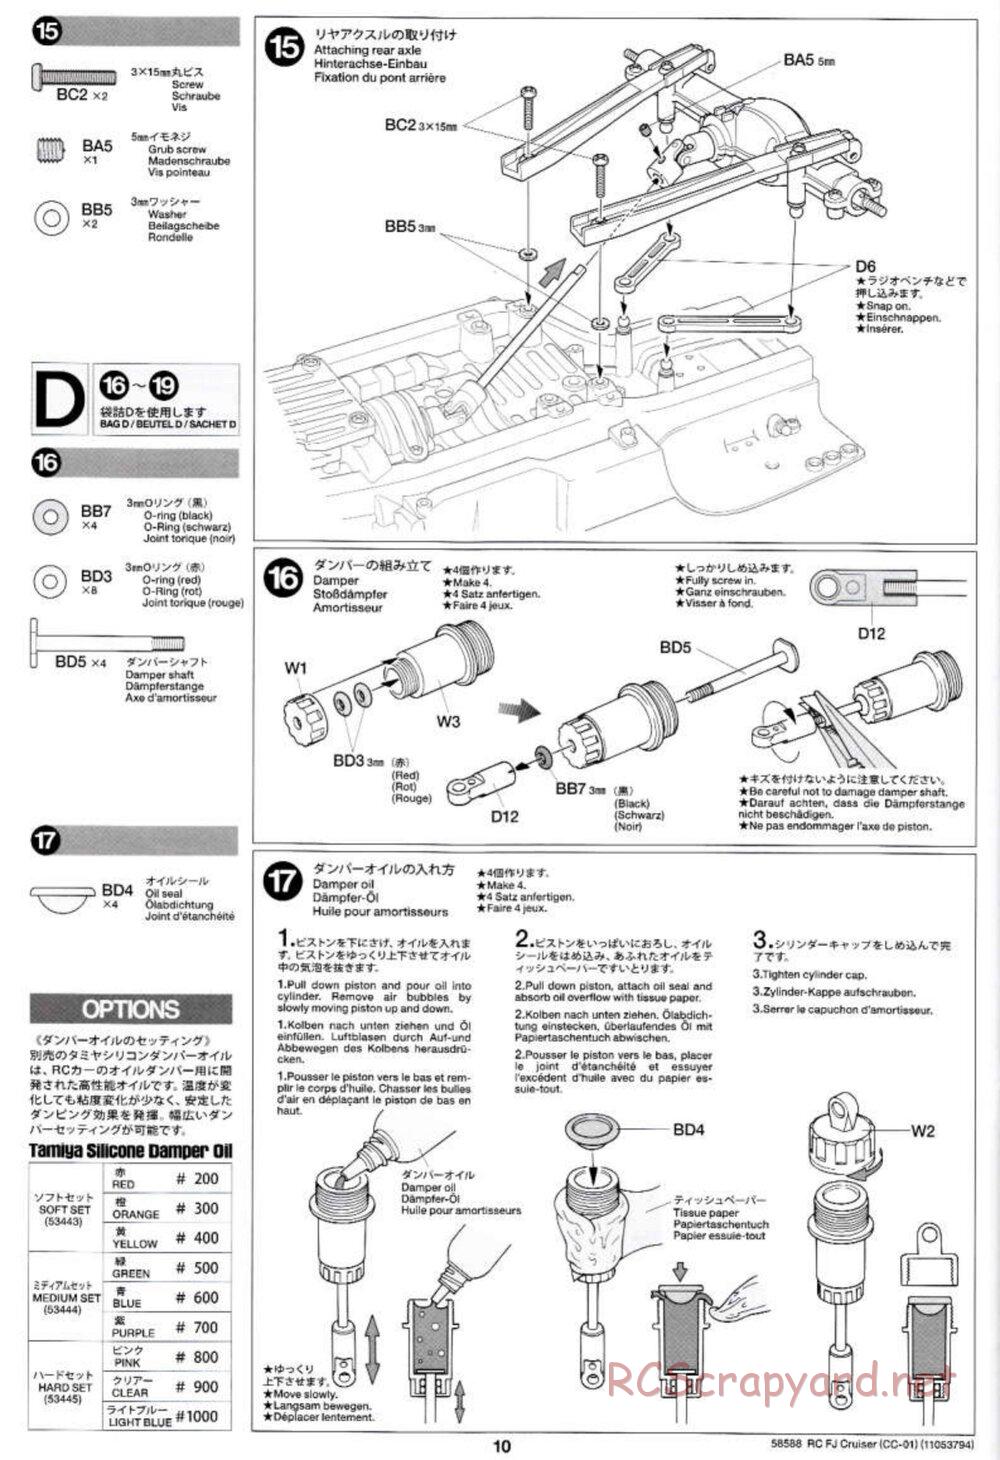 Tamiya - Toyota FJ Cruiser - CC-01 Chassis - Manual - Page 10